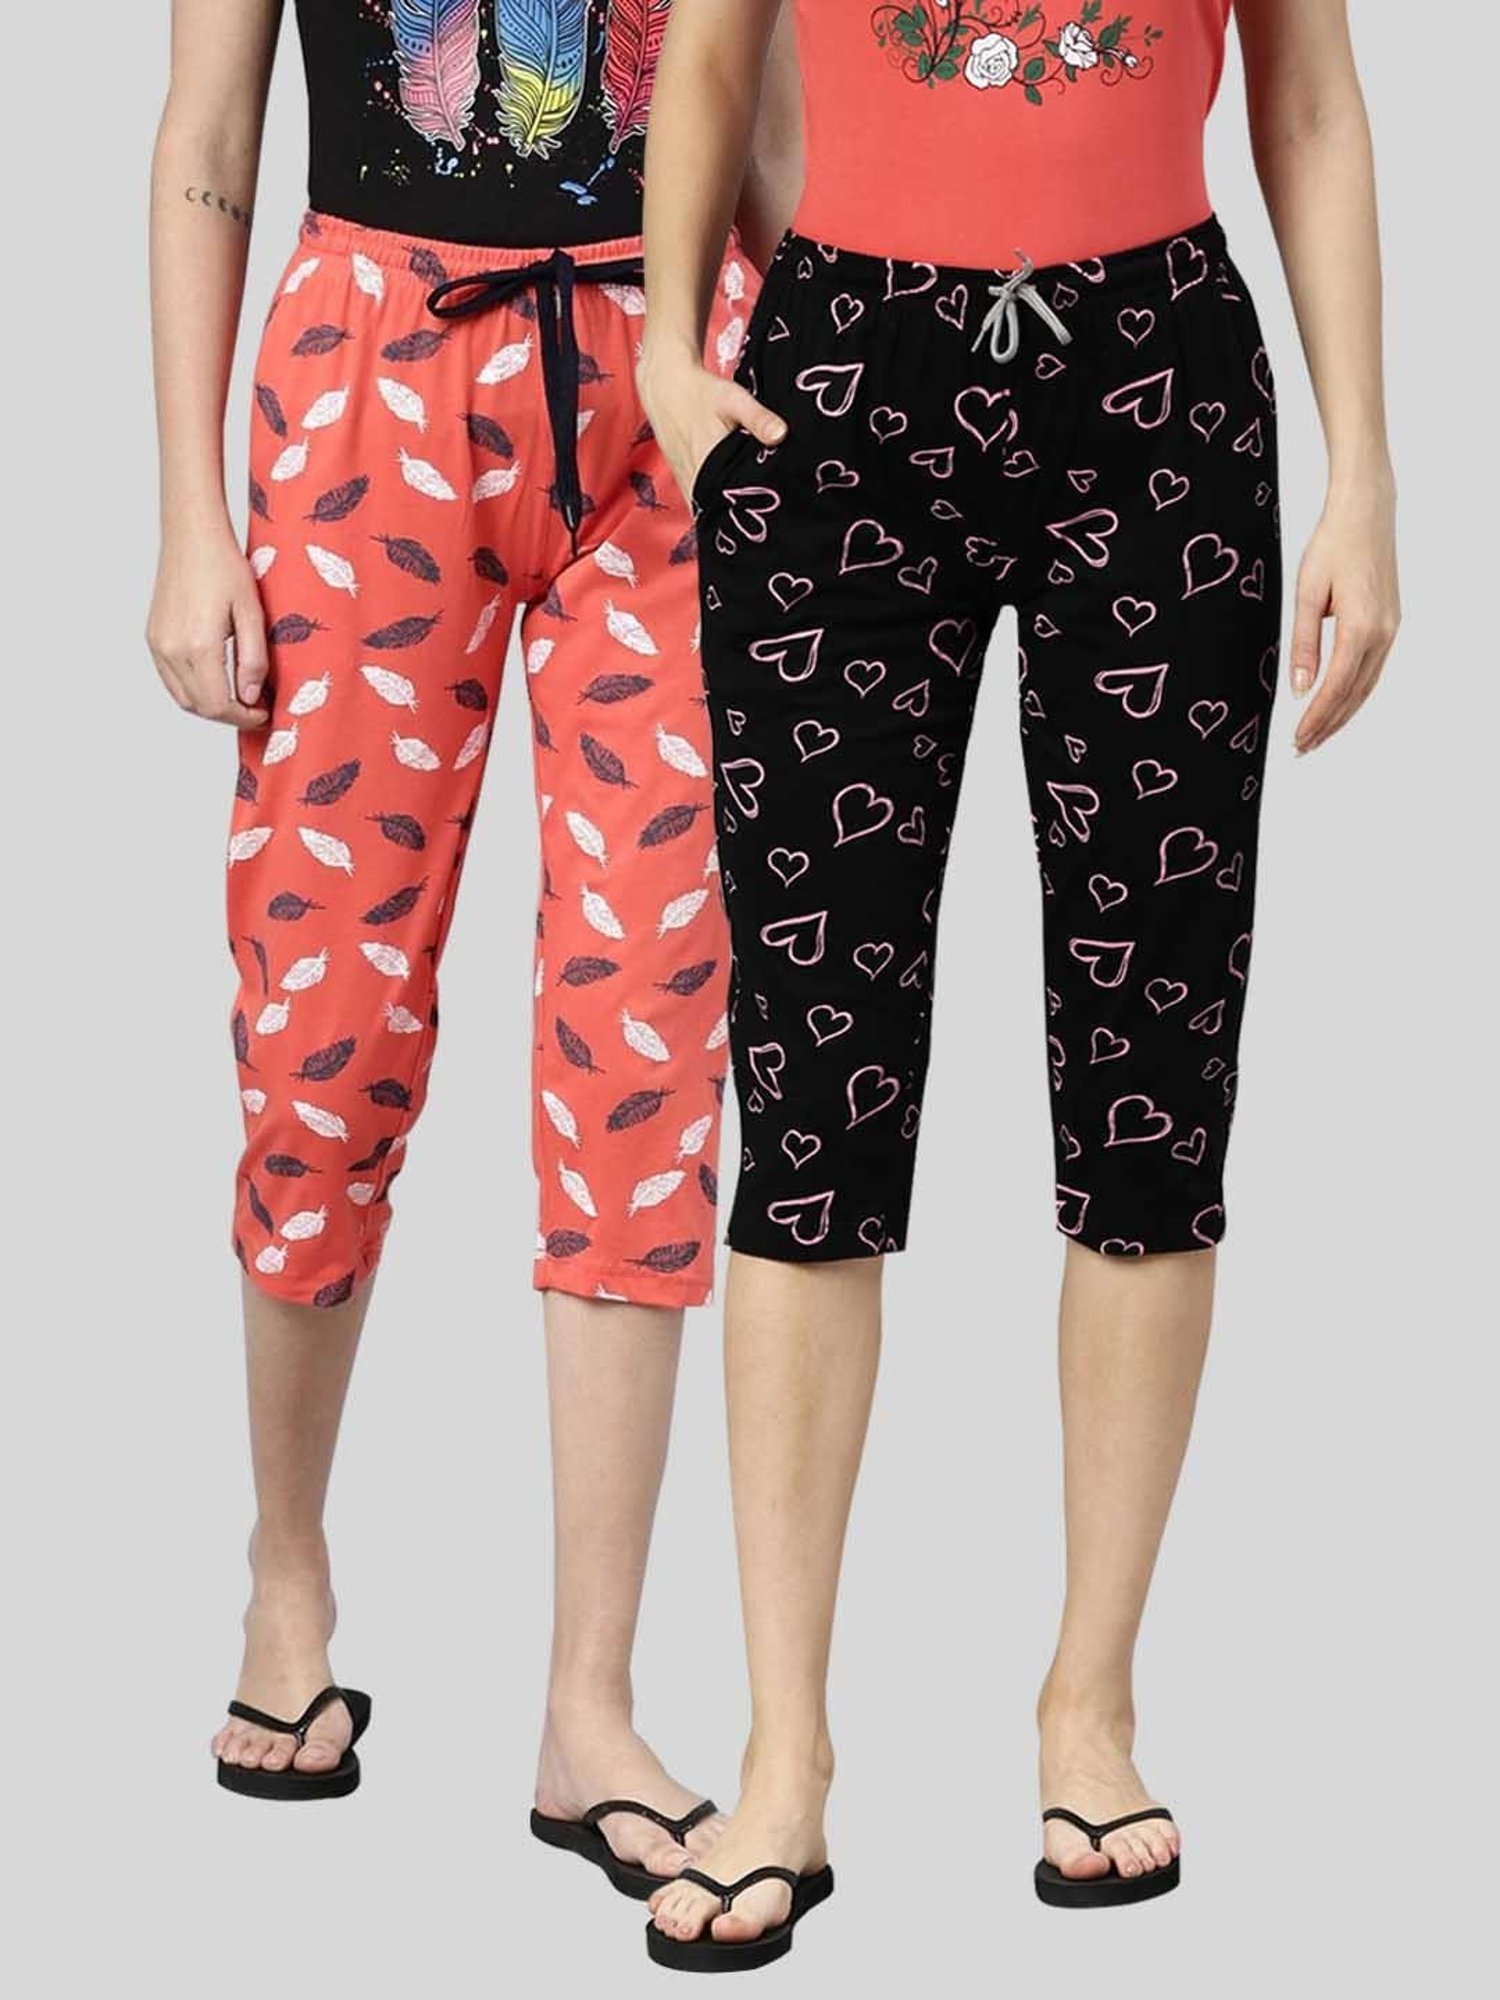 Buy MUKHAKSH (Pack of 2 Girls Printed Capri Pants for Women Casual Summer  Multicolour at Amazon.in